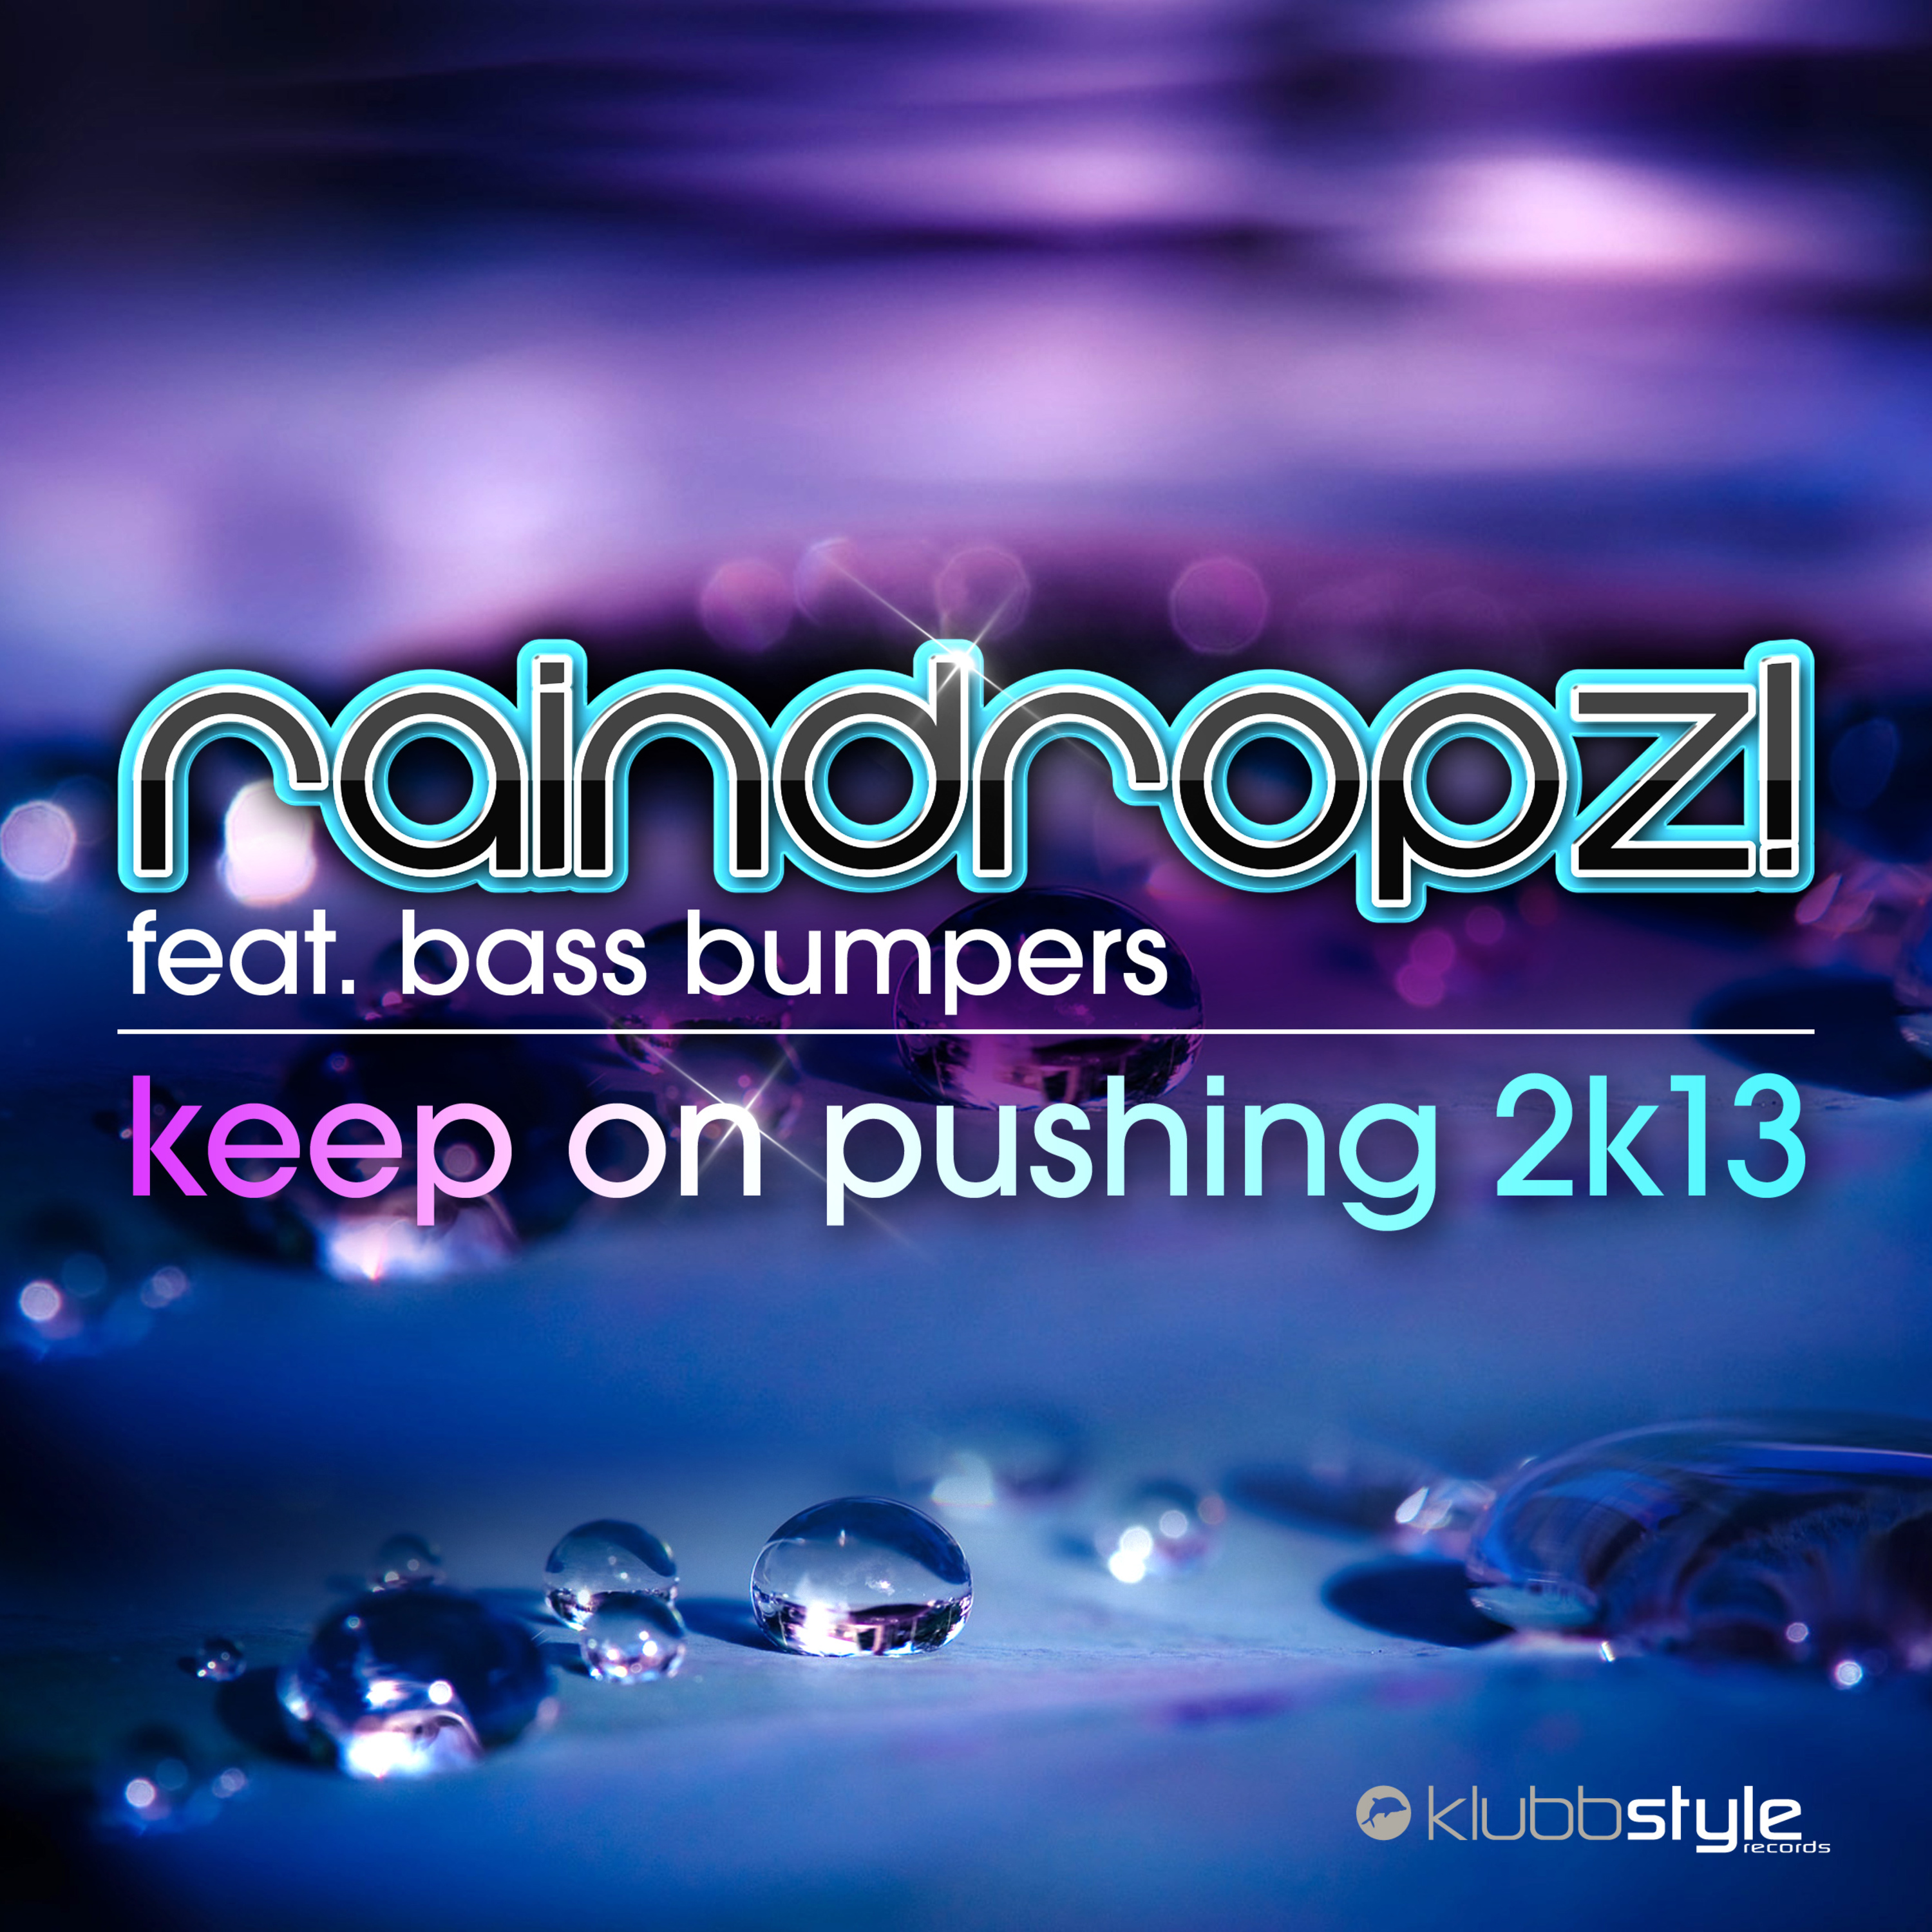 Keep On Pushing 2K13 (KlubbDropz! Remix)